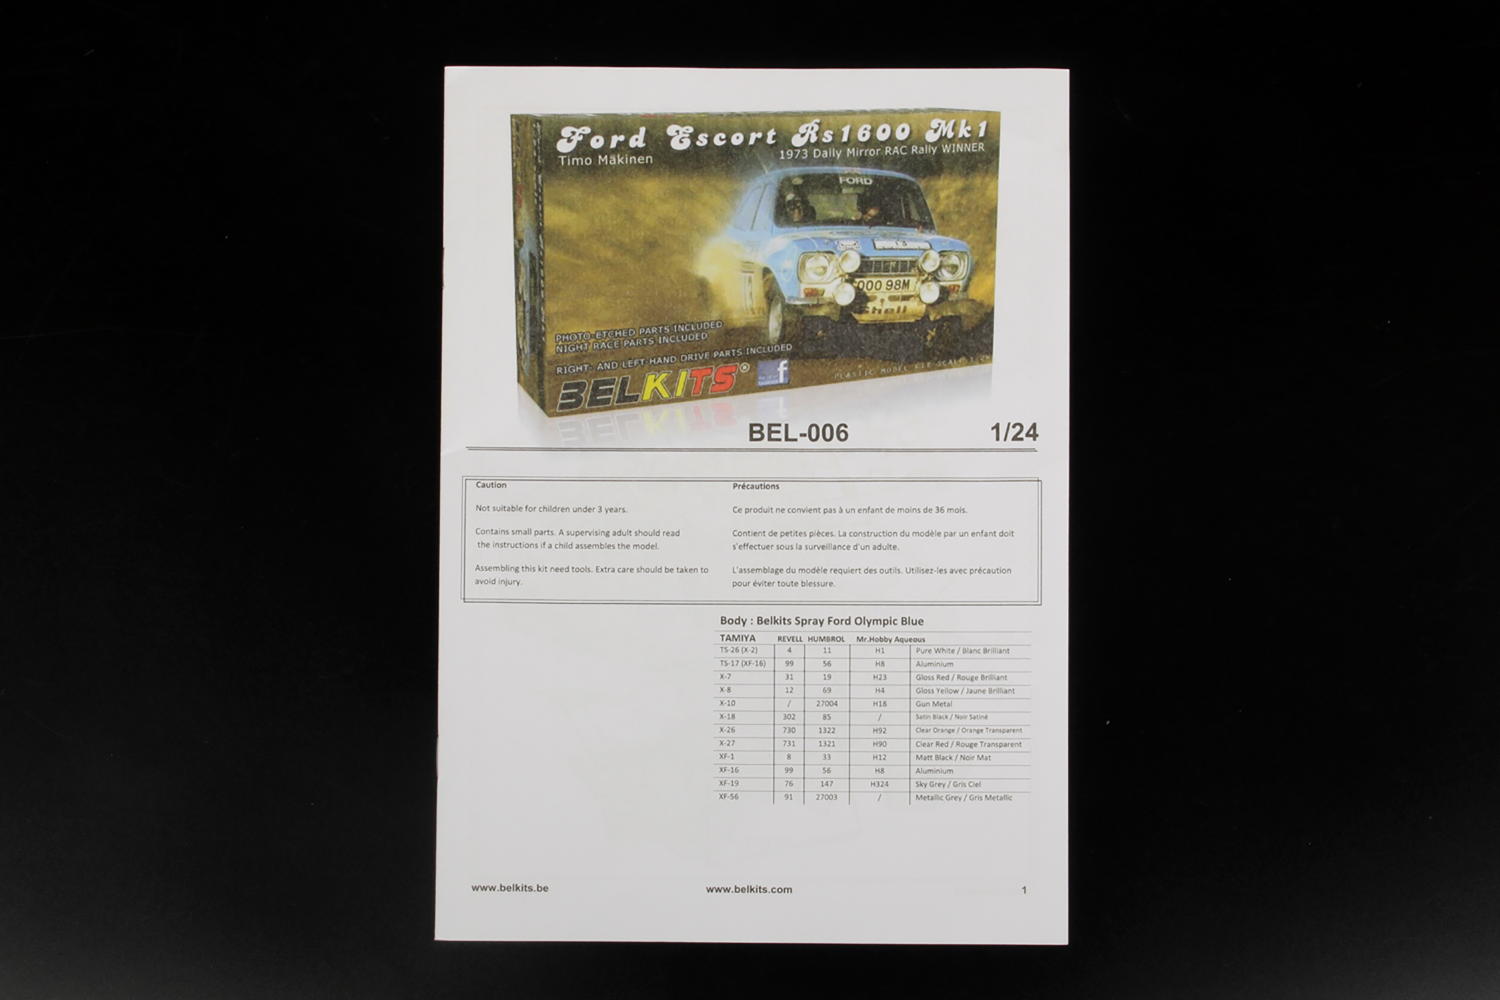 1/24 Ford Escort RS1600 MK.I 1973 RAC Rally Winner